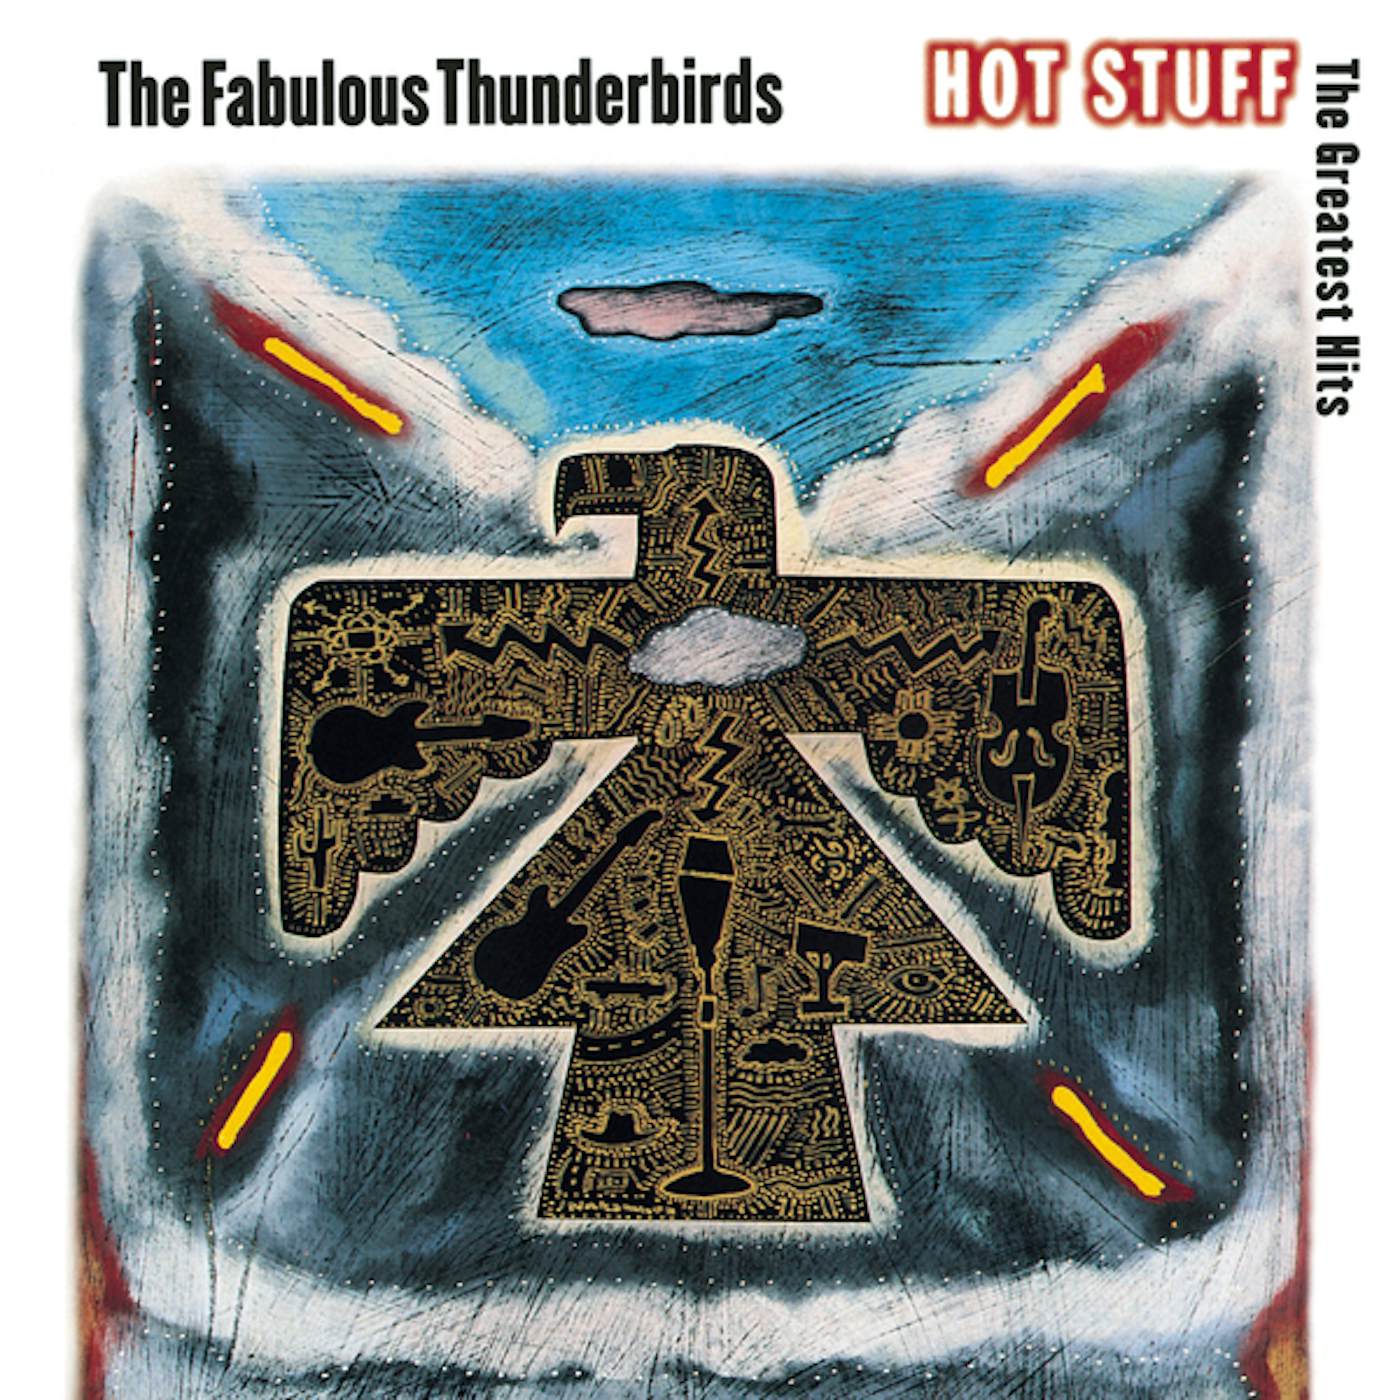 The Fabulous Thunderbirds HOT STUFF: GREATEST HITS CD